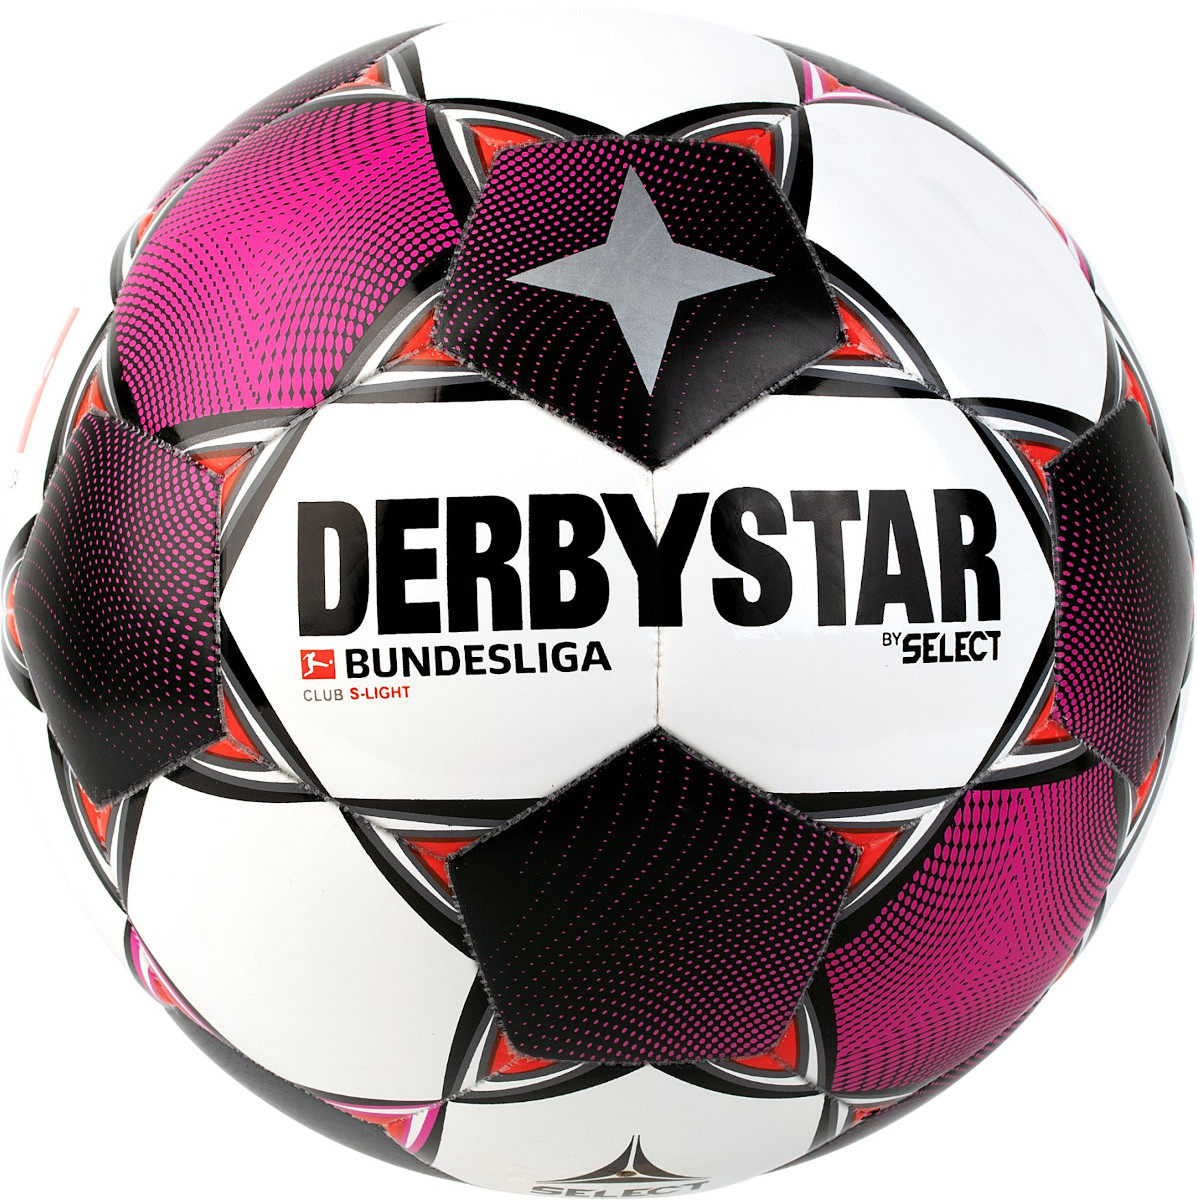 Derbystar Bundesliga Club SLight 290g training ball Labda